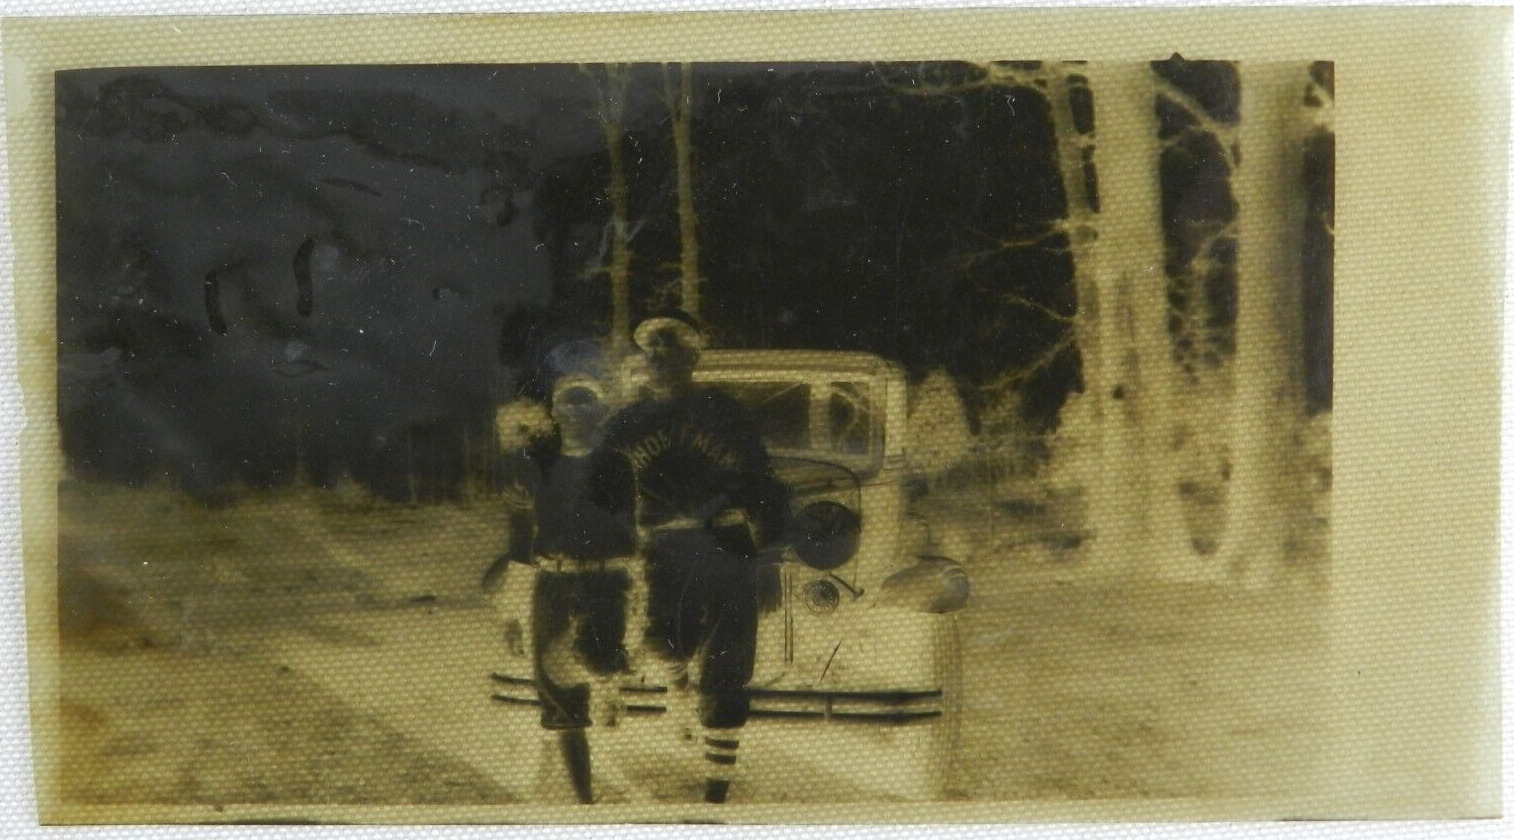 Old Man In Baseball Uniform Holding Son Portrait - Negative Vintage Photograph